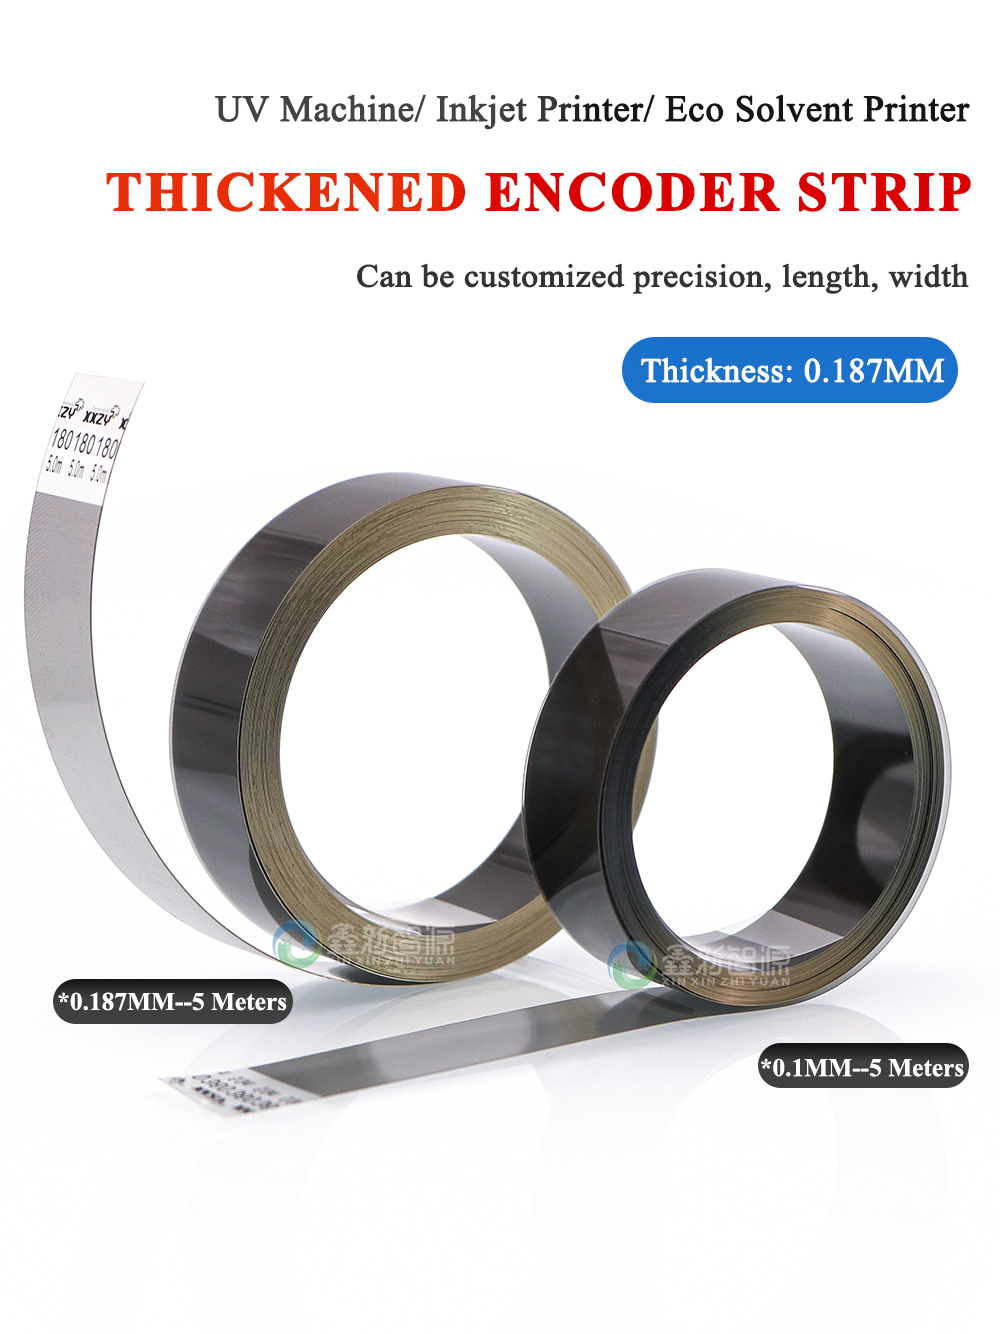 Thickened Encoder Strip 180LPI